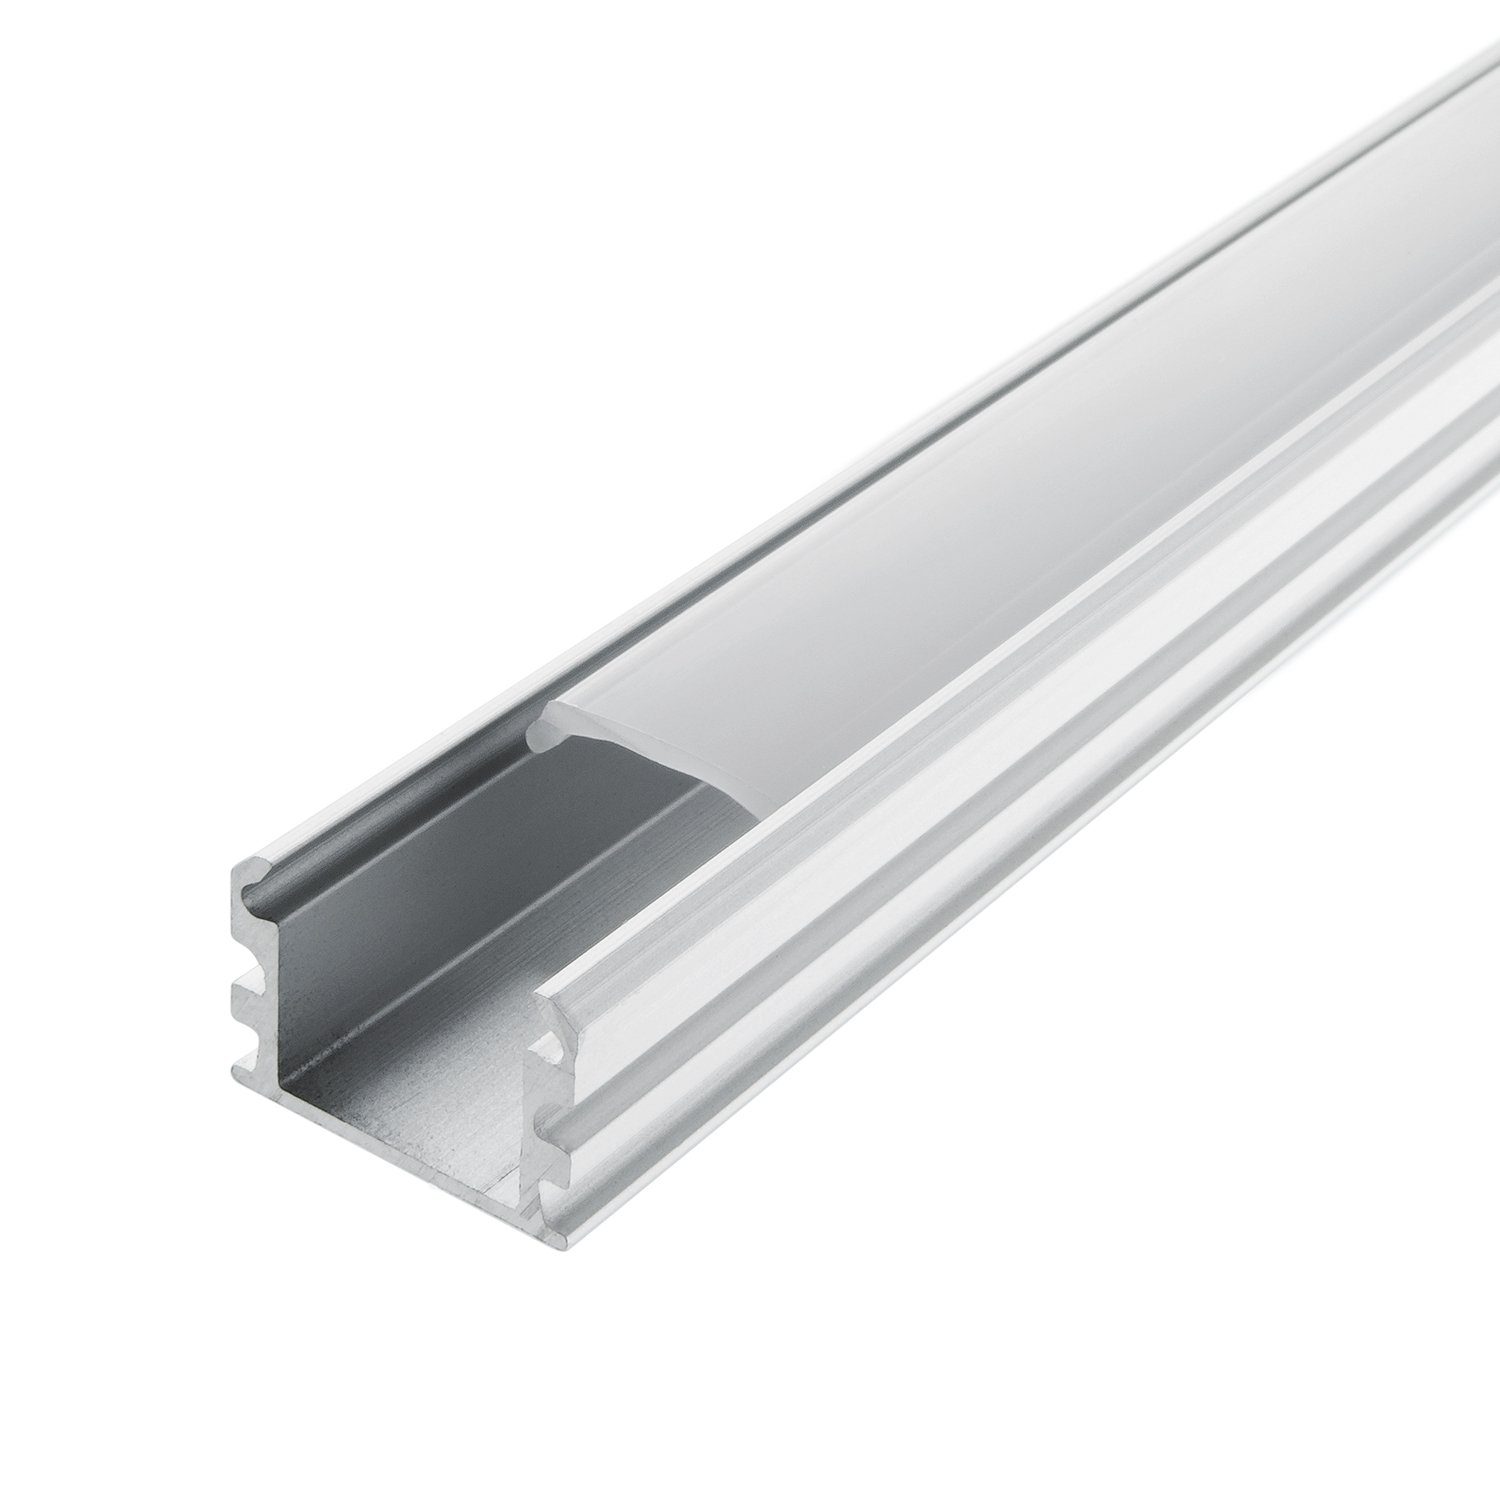 ENERGMiX LED-Stripe-Profil 2 Meter Aluprofile Alu Schiene Profil für LED Strip LED Kanal mit, Profil Kanal LED Leiste 200cm inkl. Clips und Endkappen